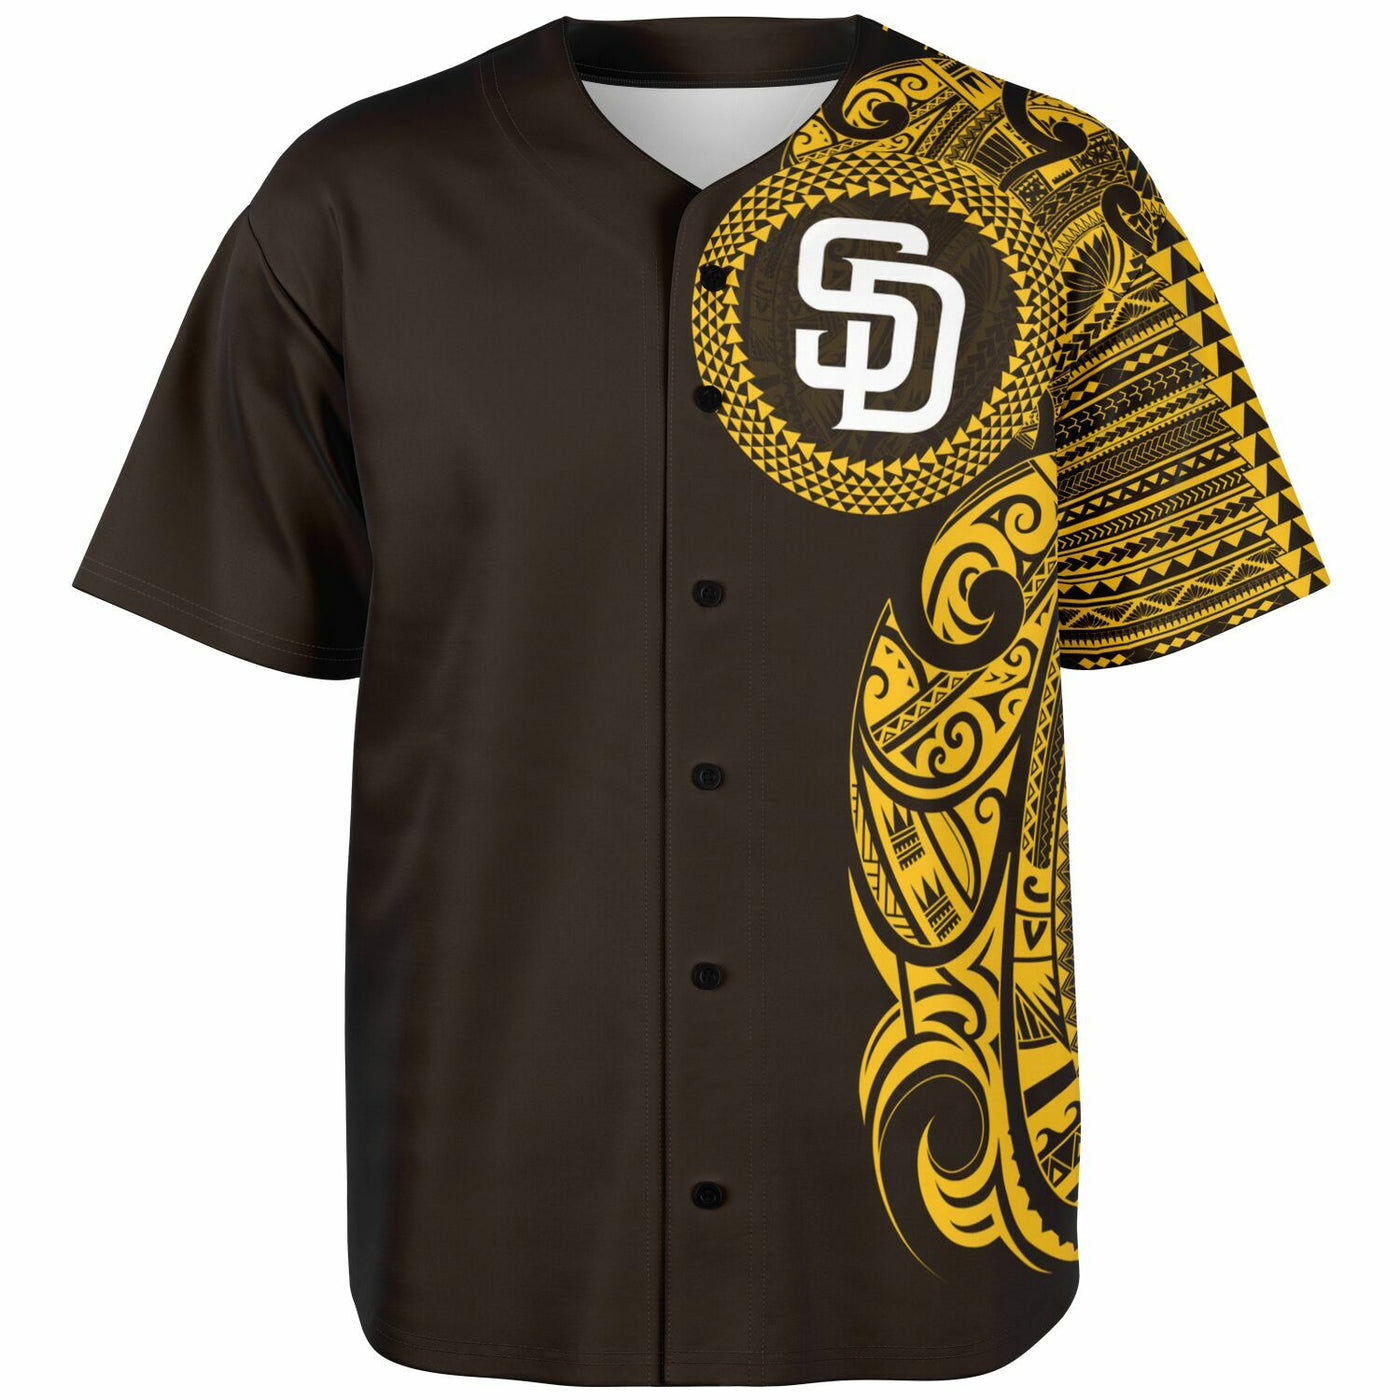 San Diego Padres Jersey, Padres Baseball Jerseys, Uniforms